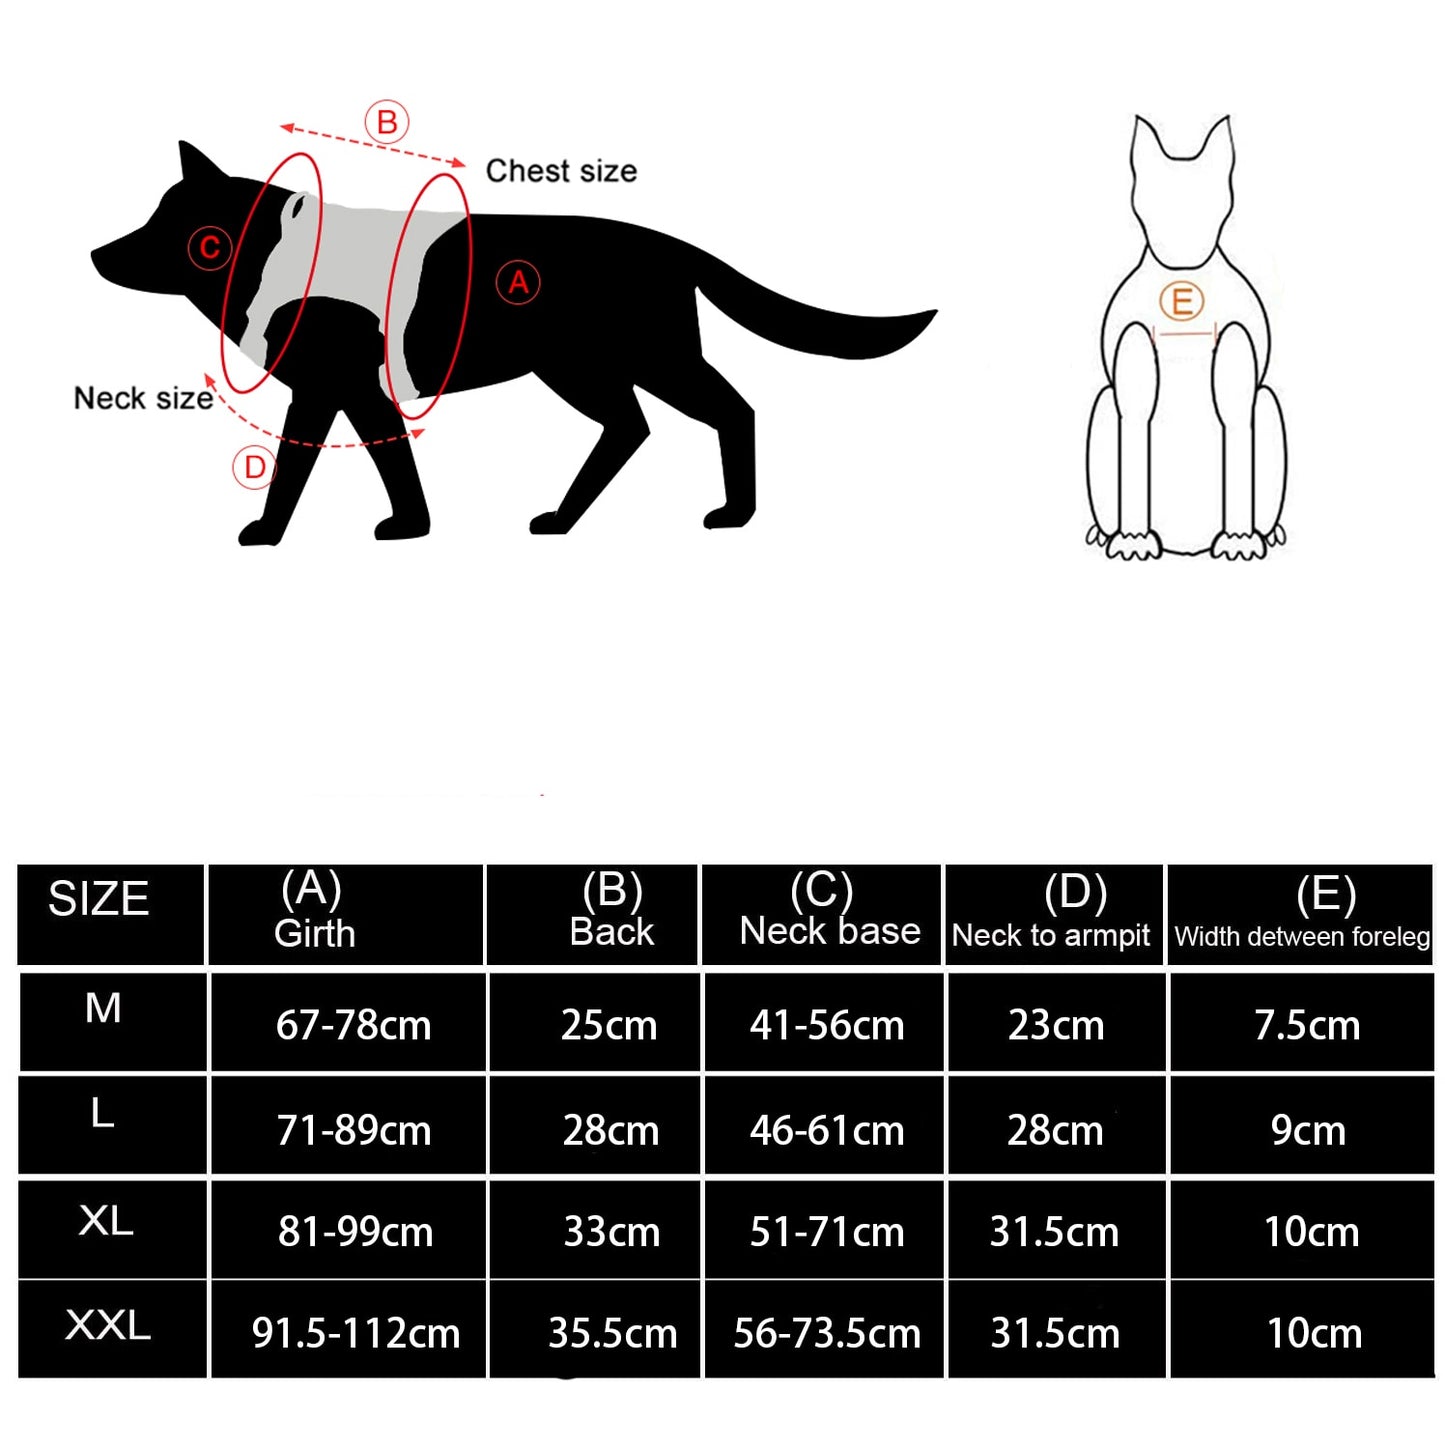 Tactical Dog Harness And Leash Set Metal Buckle Big Dog Vest Training